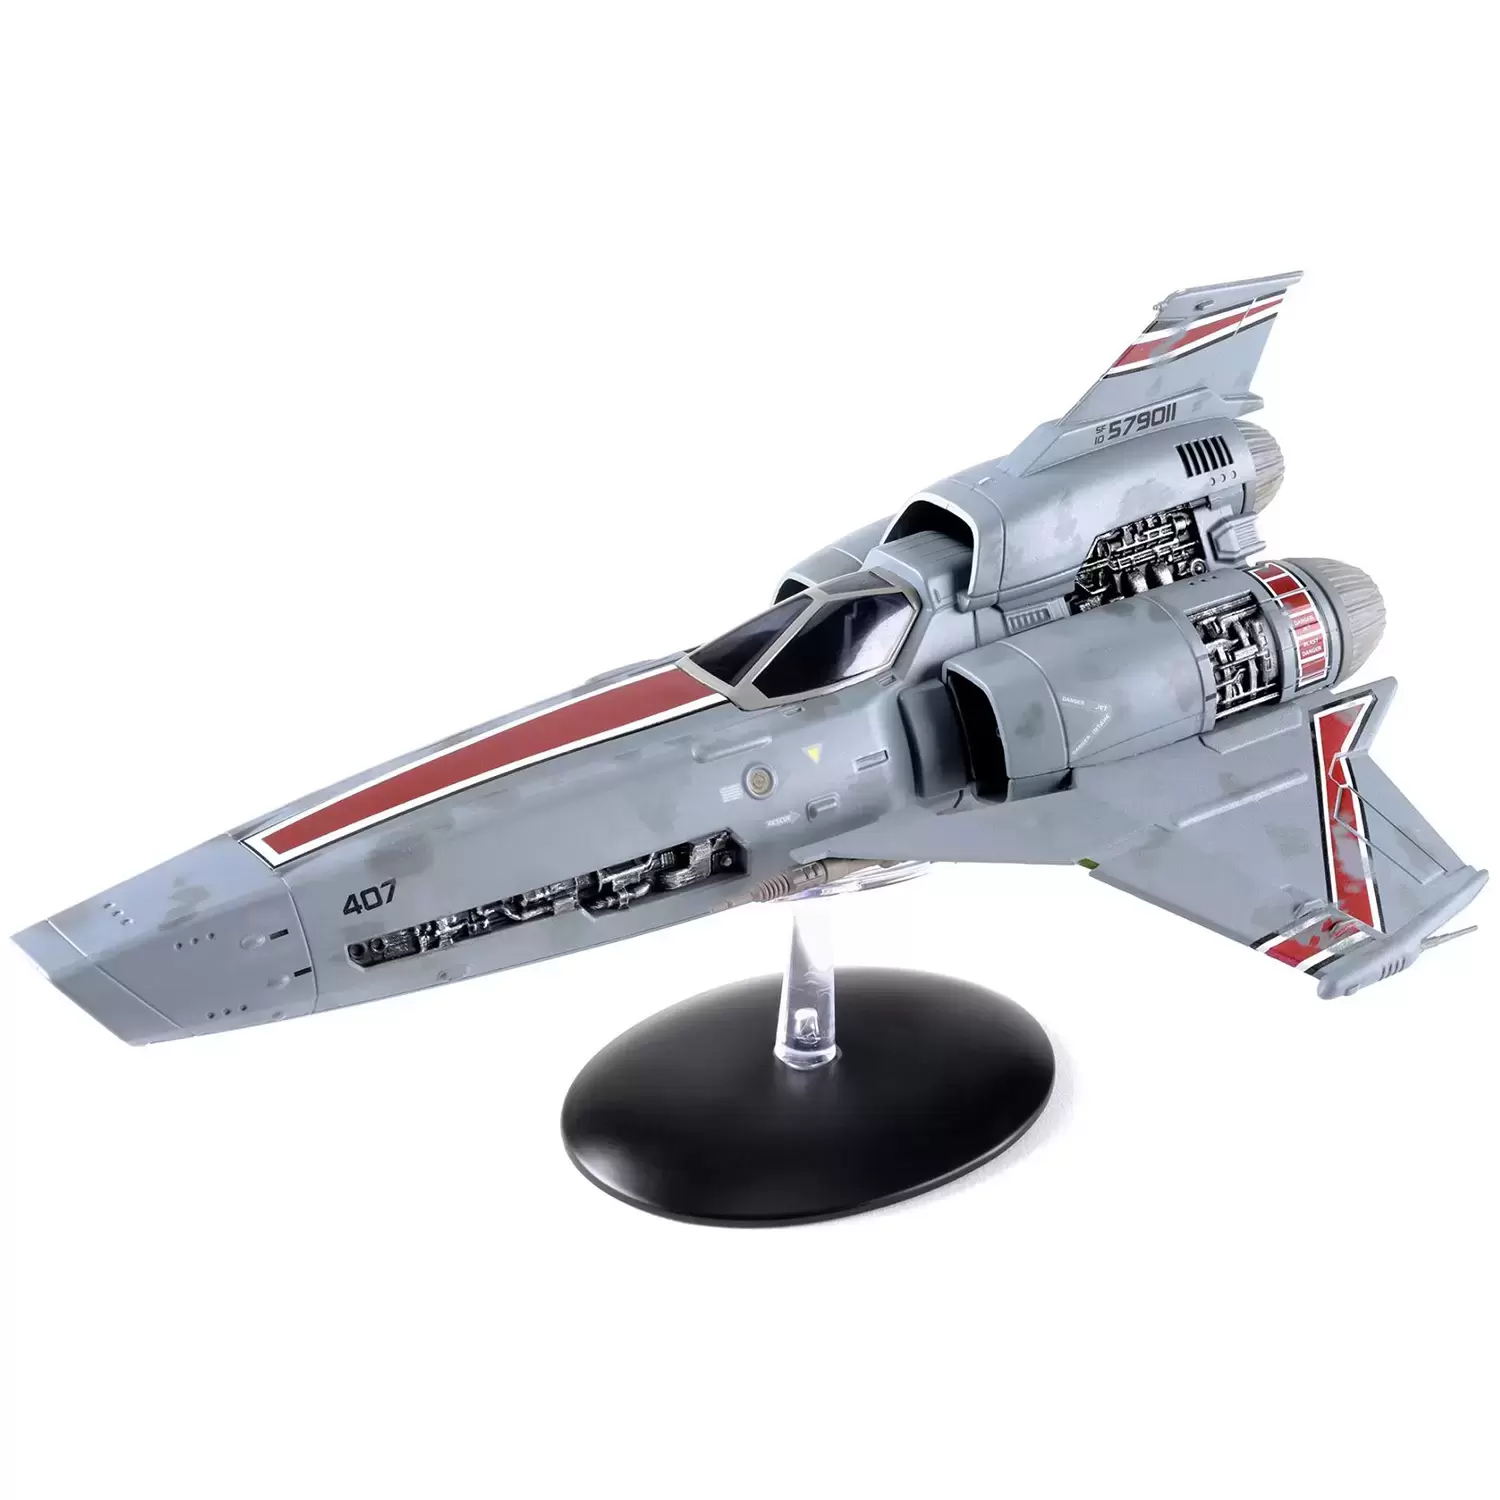 Battlestar Galactica - The Official Ships Collection - Viper (Blood & Chrome)